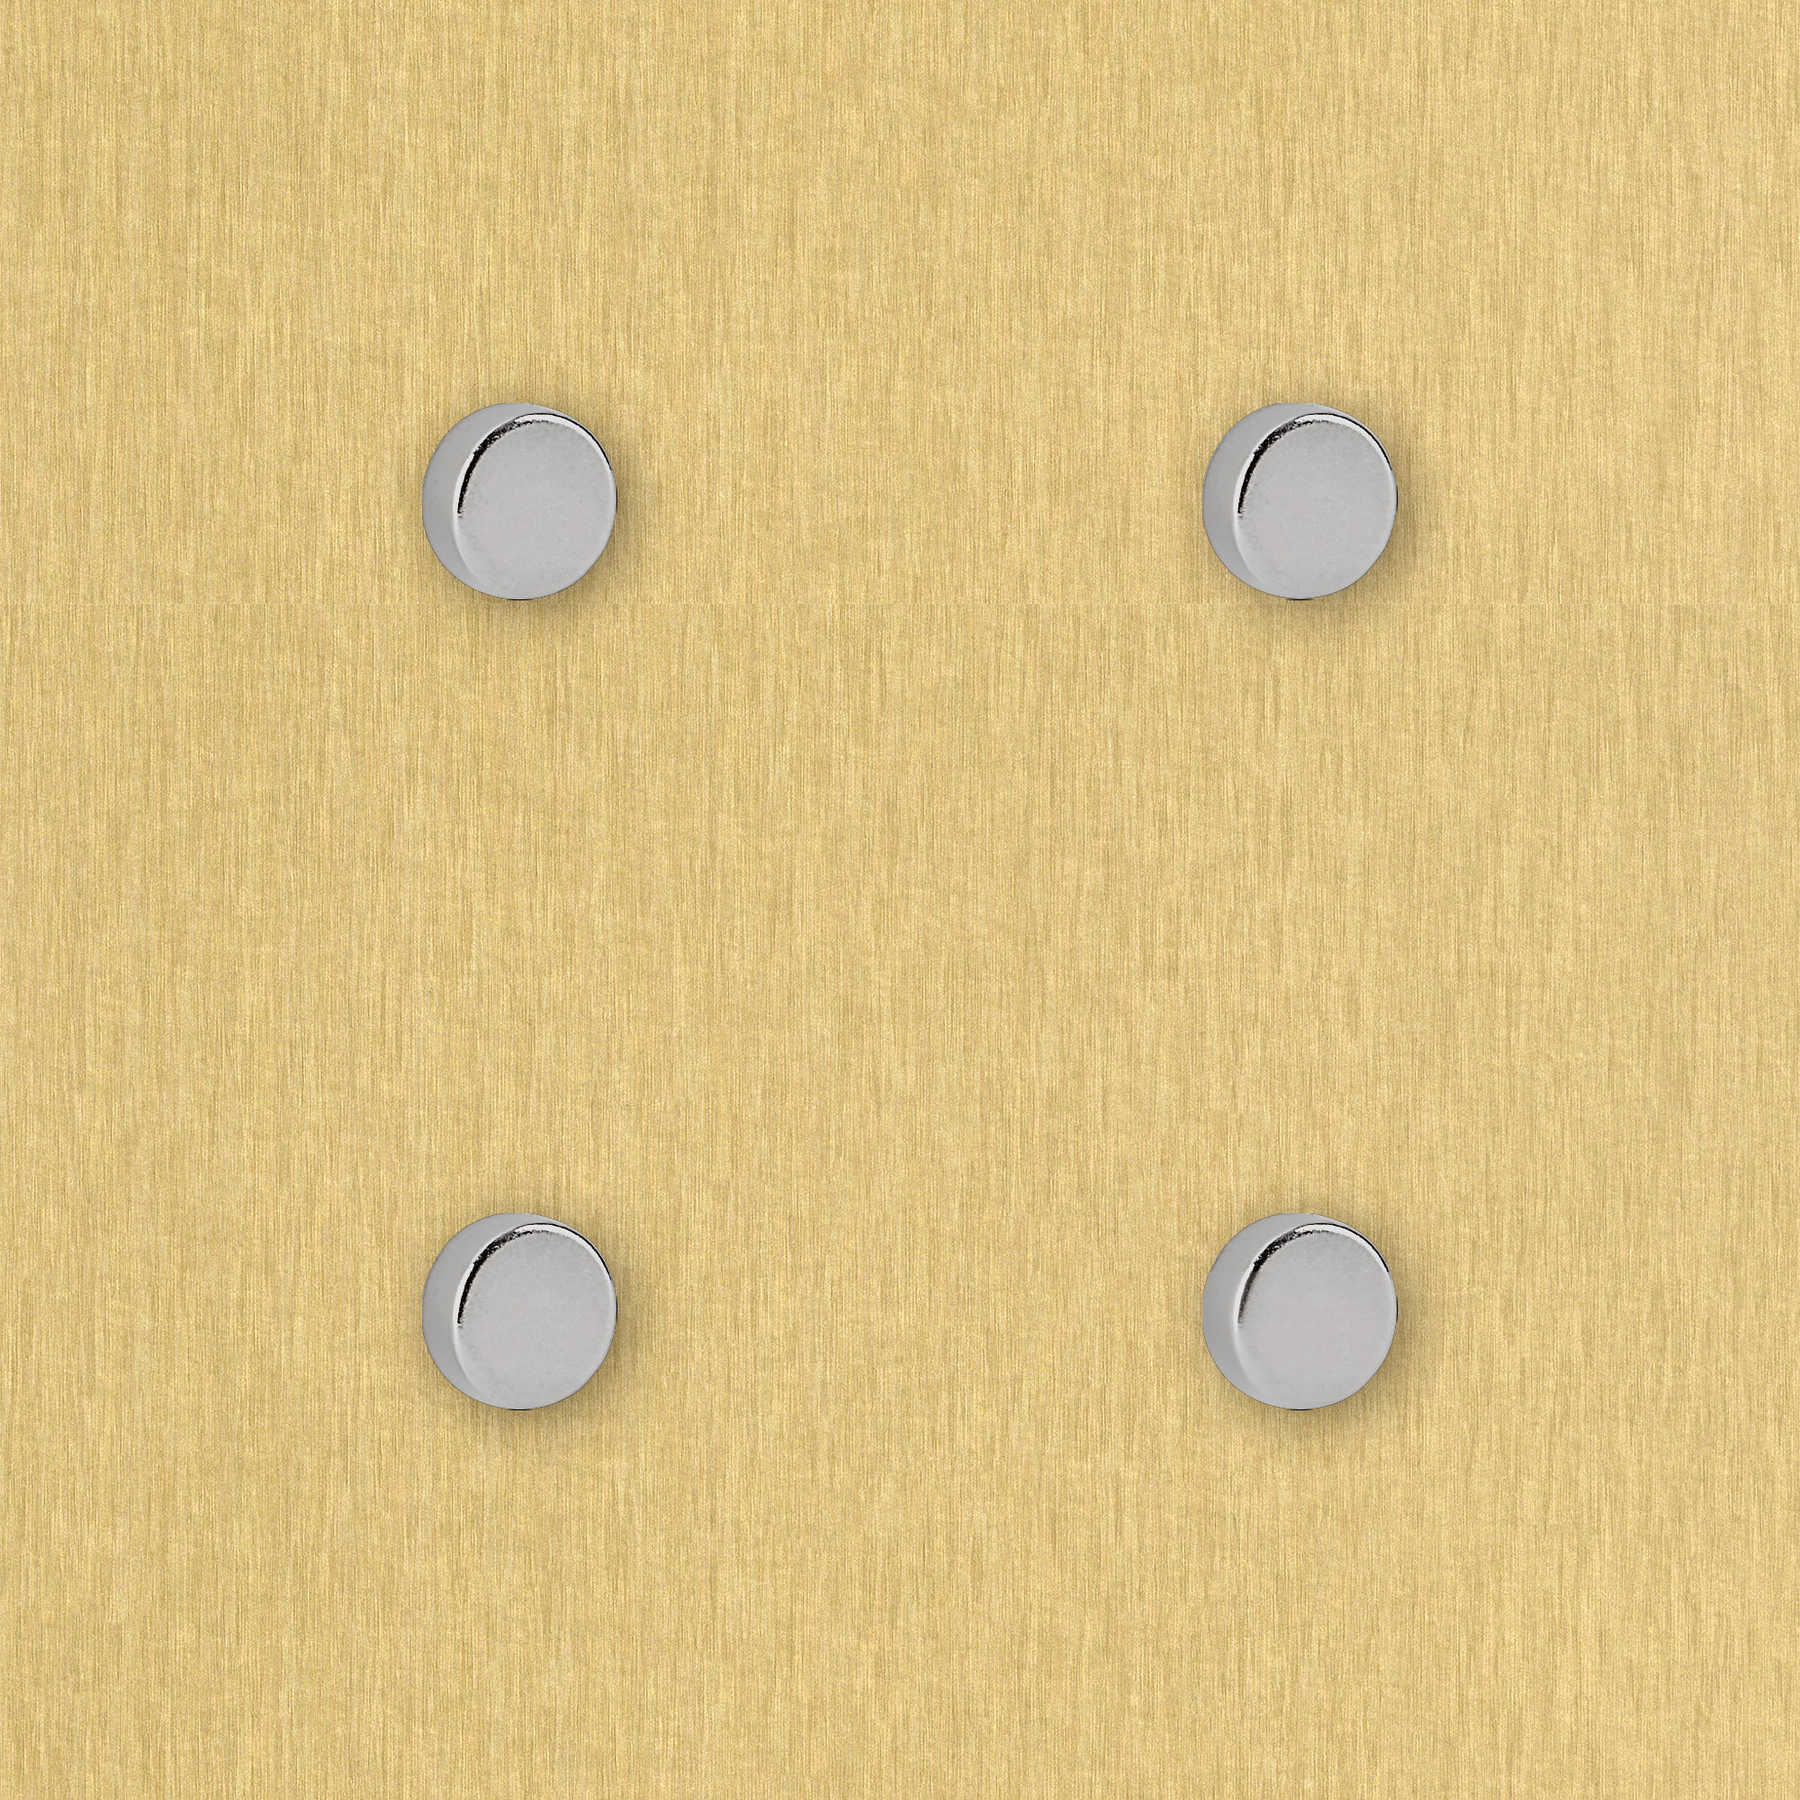             Set di 4 magneti rotondi e forti da 10 x 4 mm
        